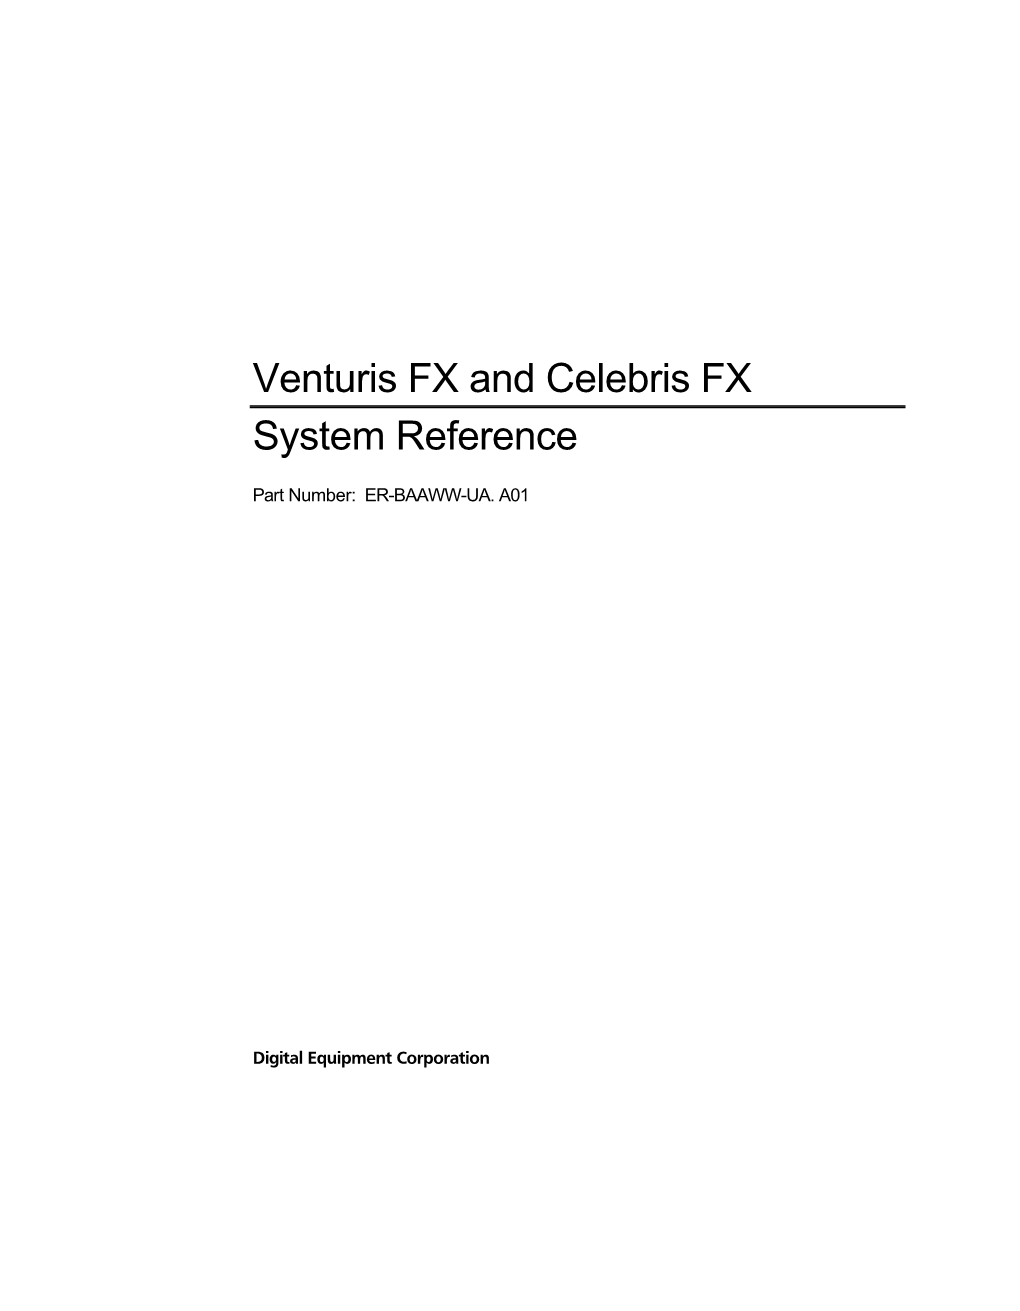 Venturis FX and Celebris FX System Reference